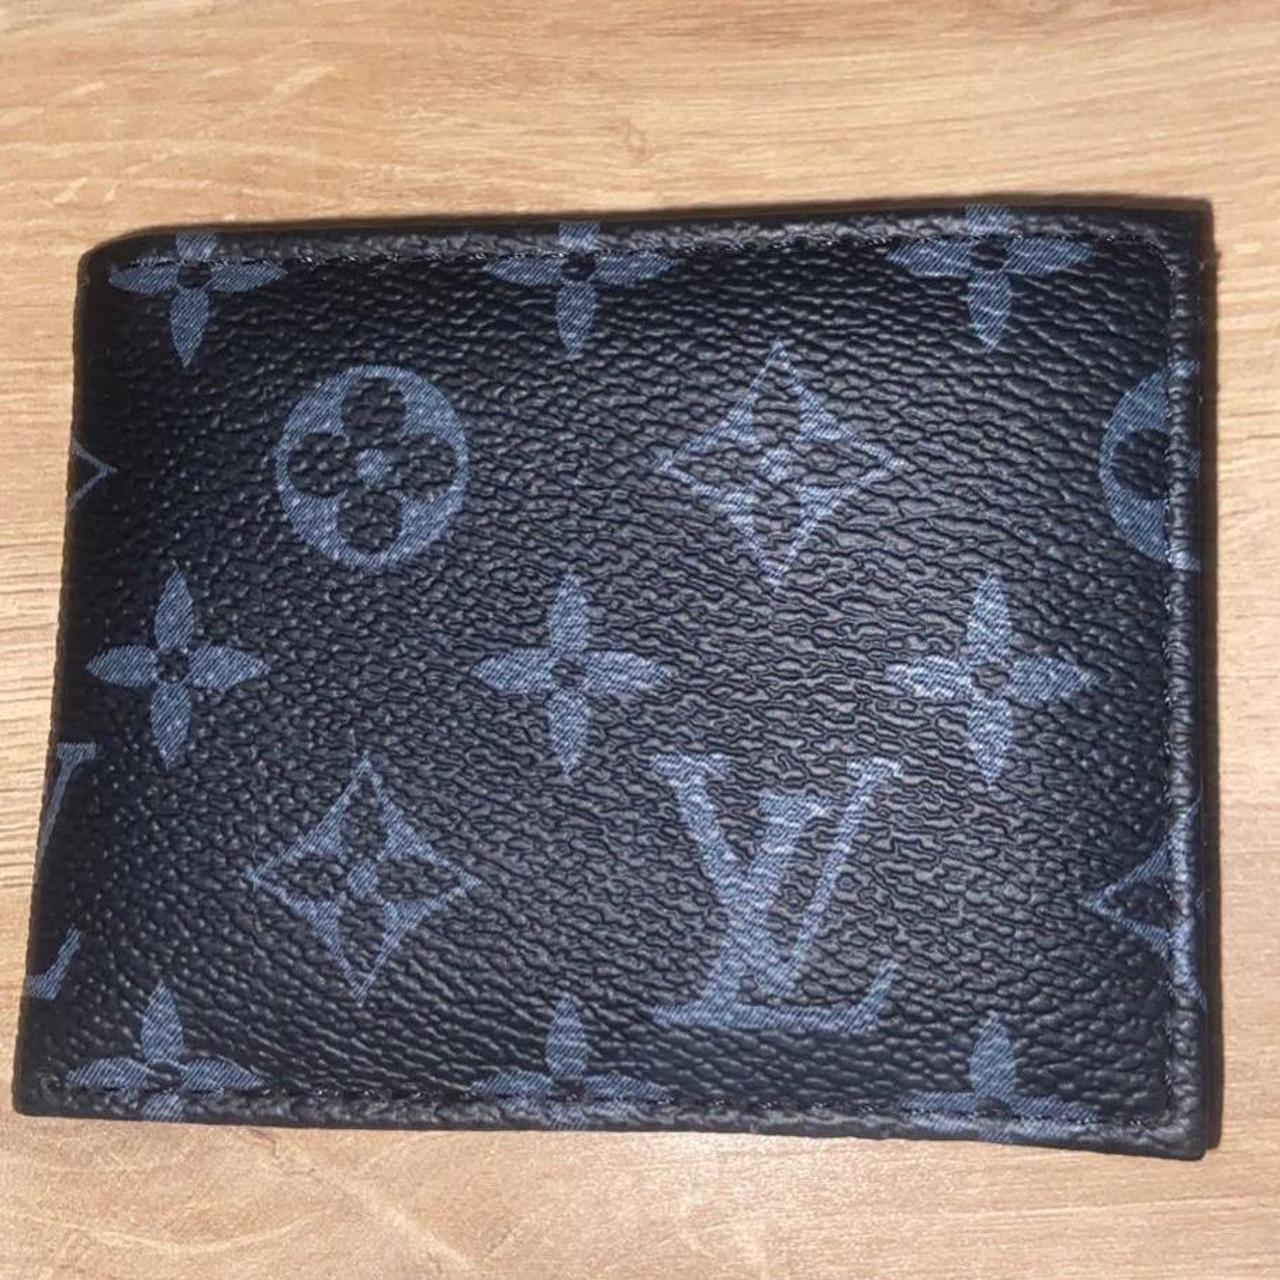 Brand new lv wallet not used #Wallet #LV - Depop